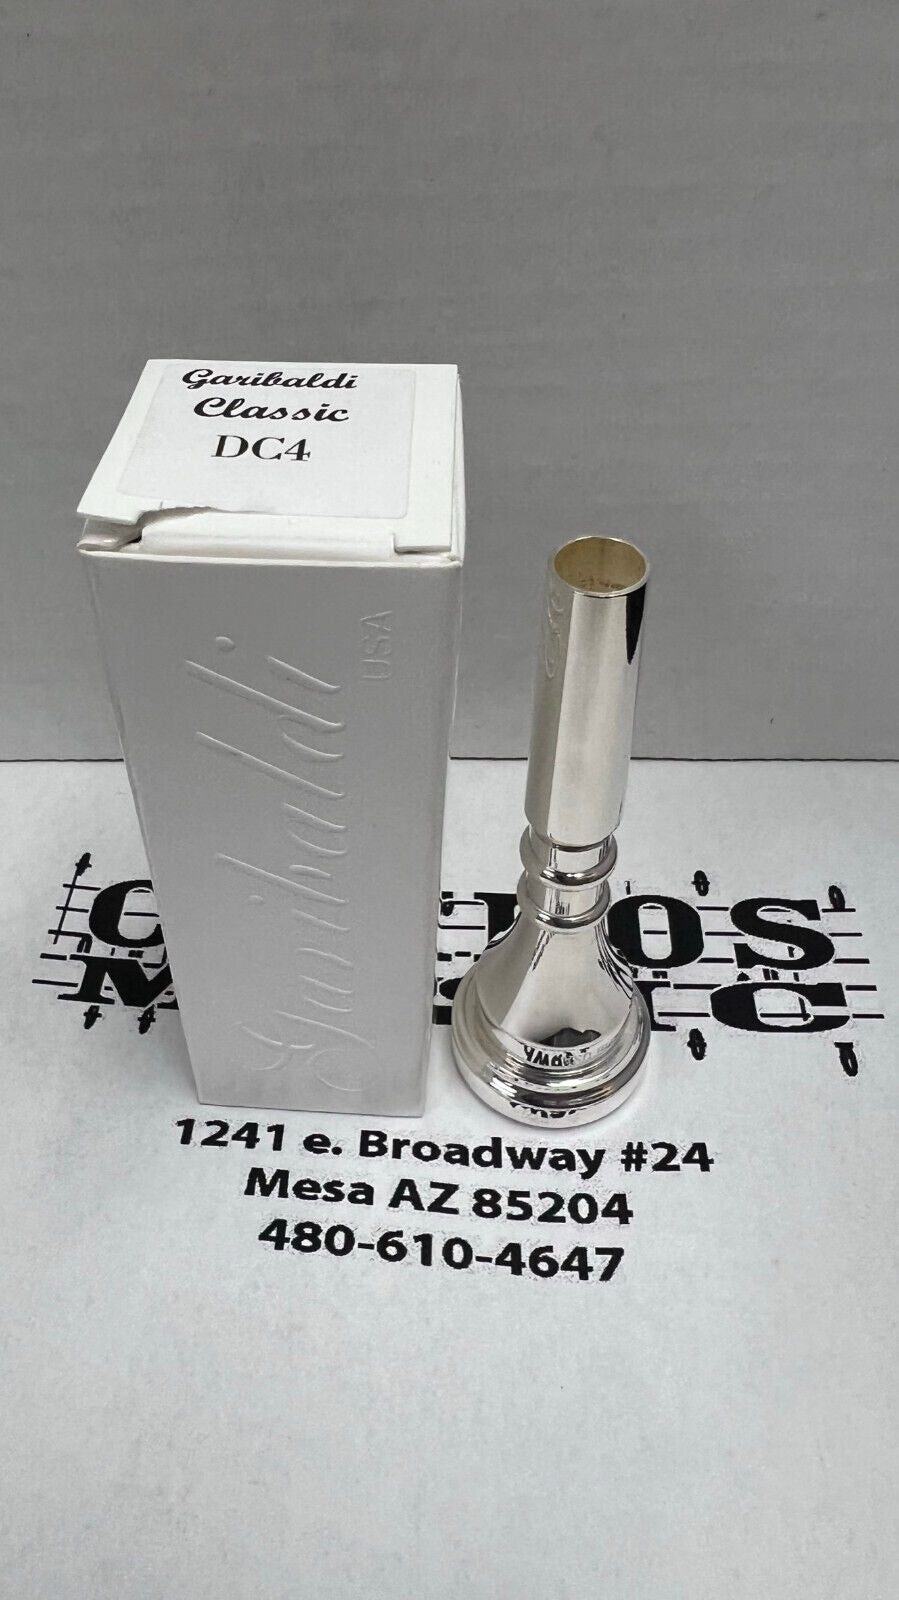 Garibaldi Trompeta / Trumpet DC4 Mouthpiece CLASSIC